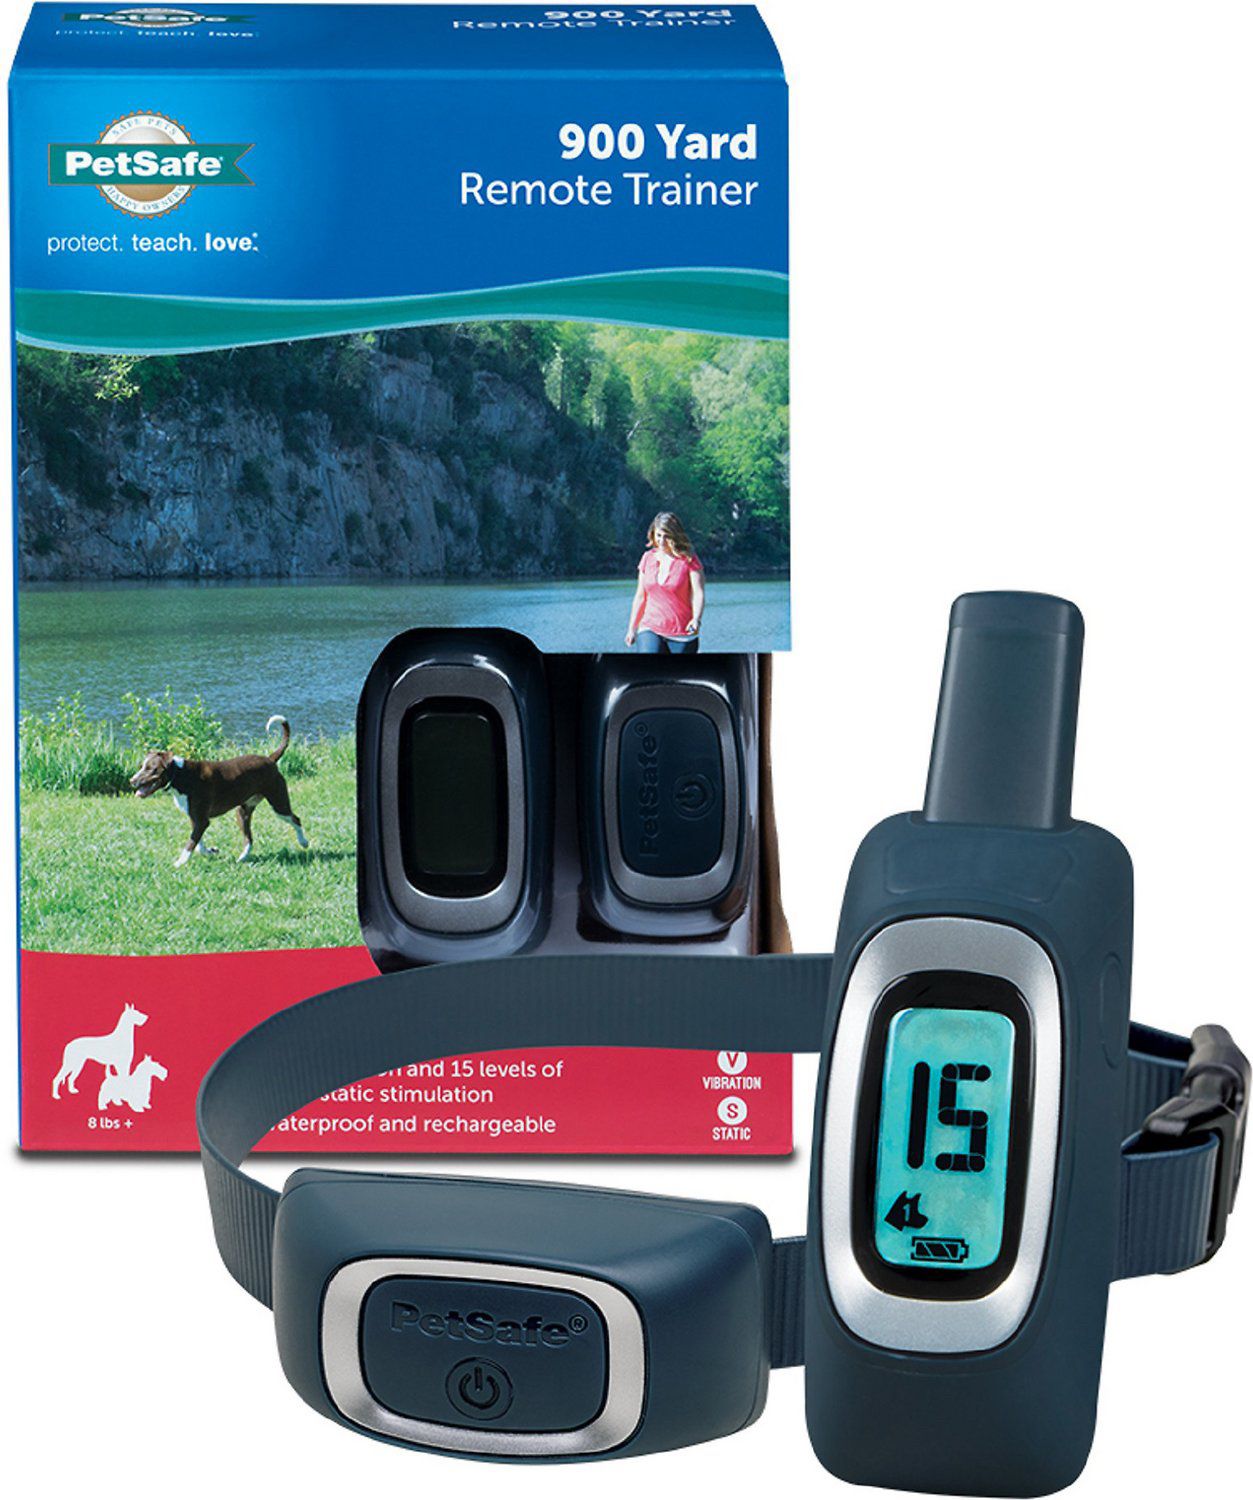 Dog electric training collar PetSafe 900 yard remote trainer